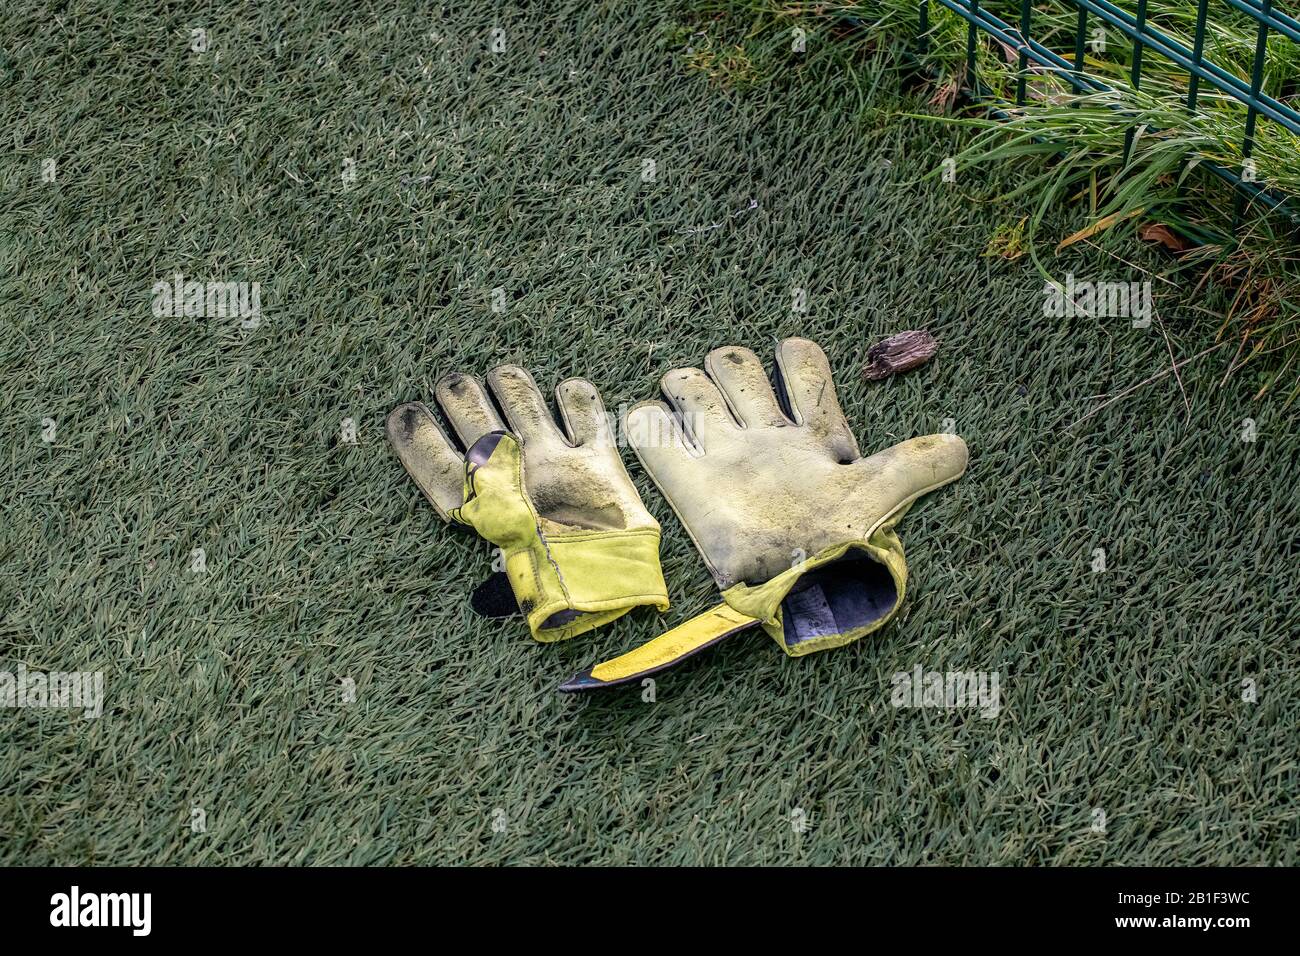 Glasgow, Scotland, UK. 16th February 2020:  Old goalkeepers gloves on the ground Stock Photo